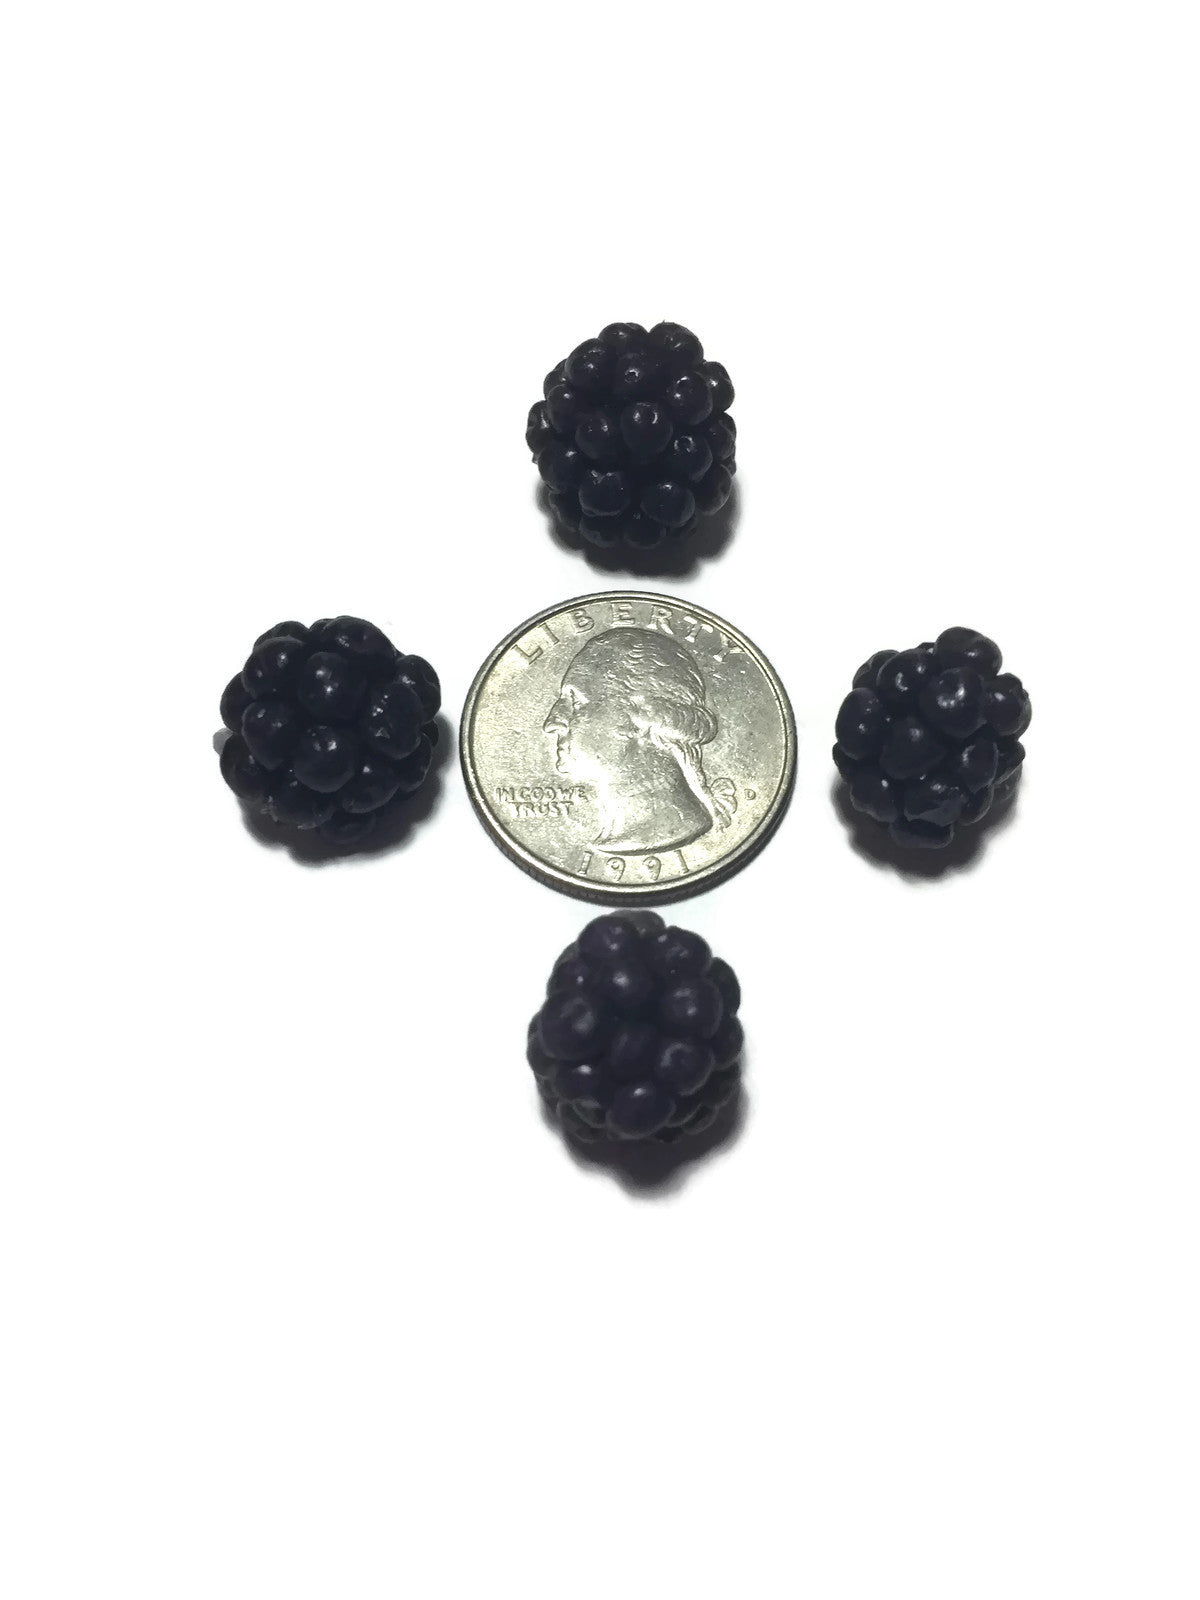 Blackberry/Raspberry Mini (A) Soap Embeds